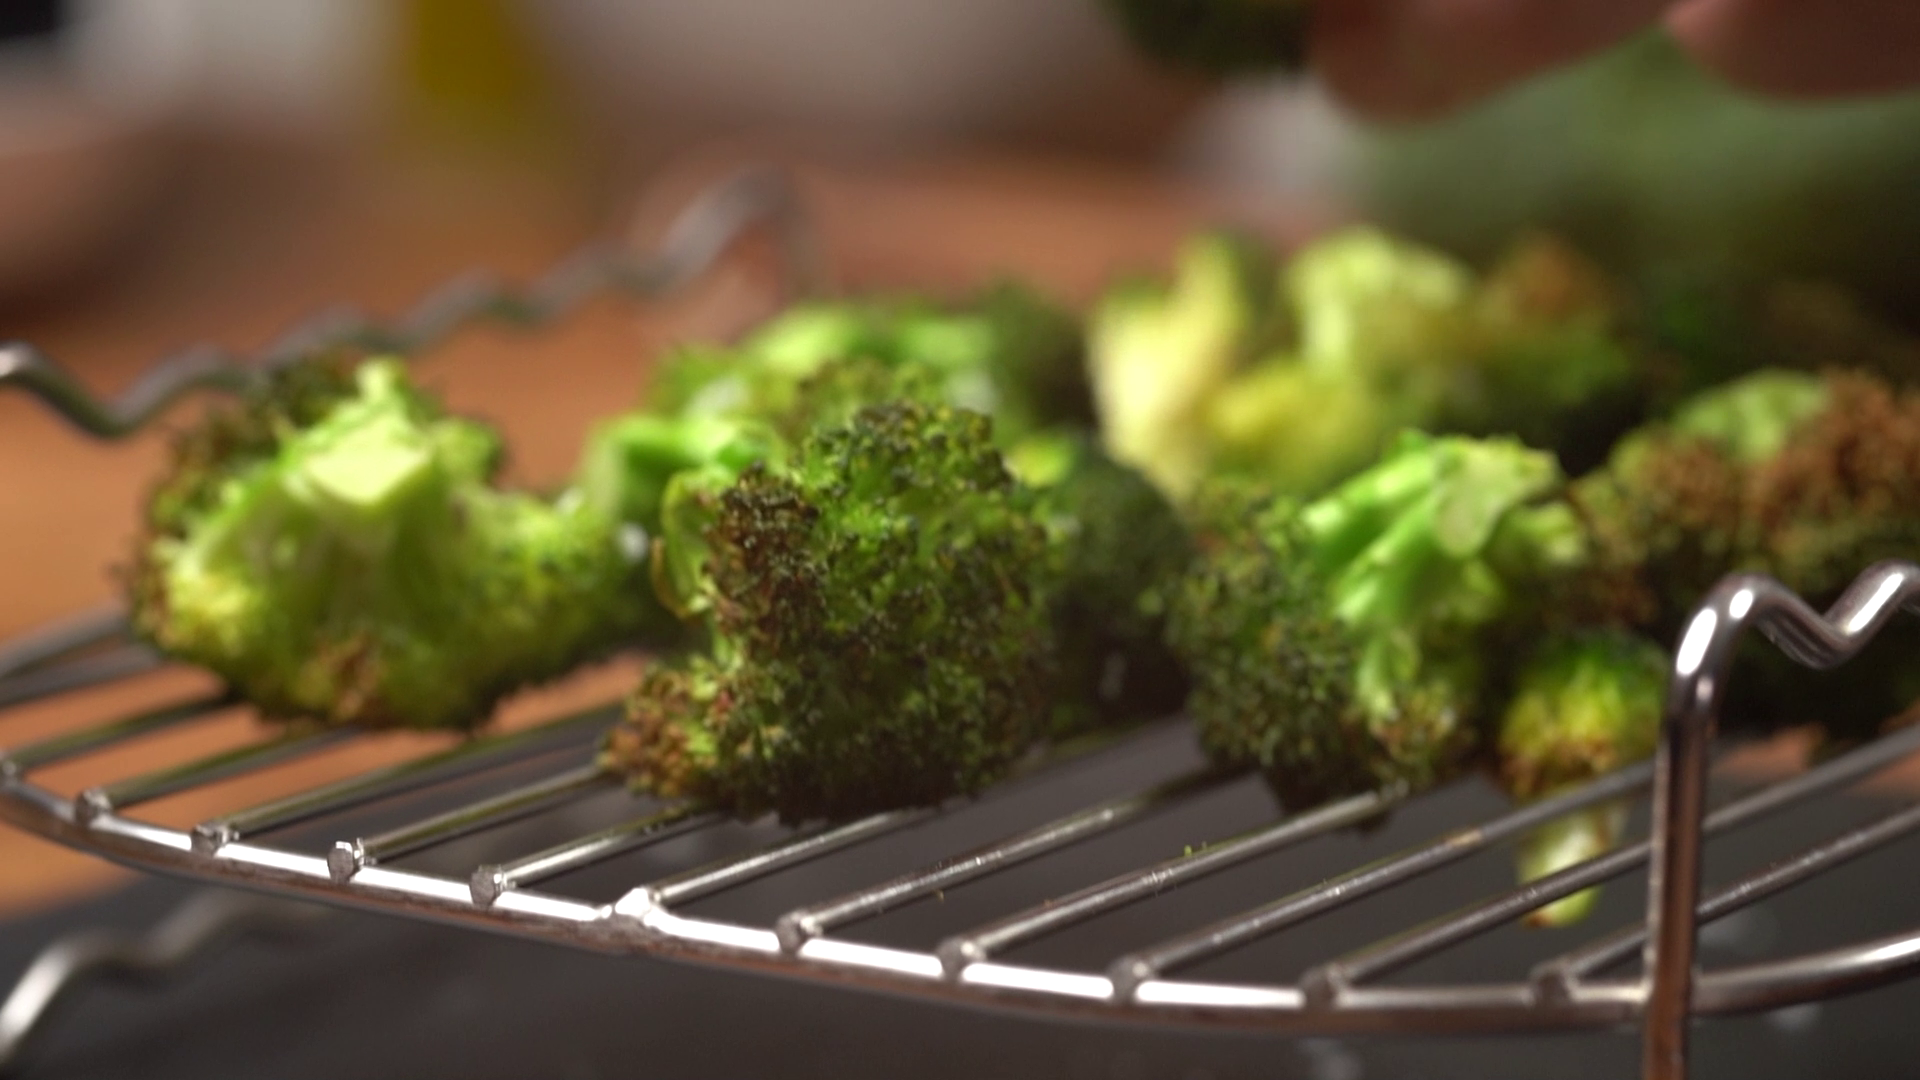 Broccoli in an air fryer